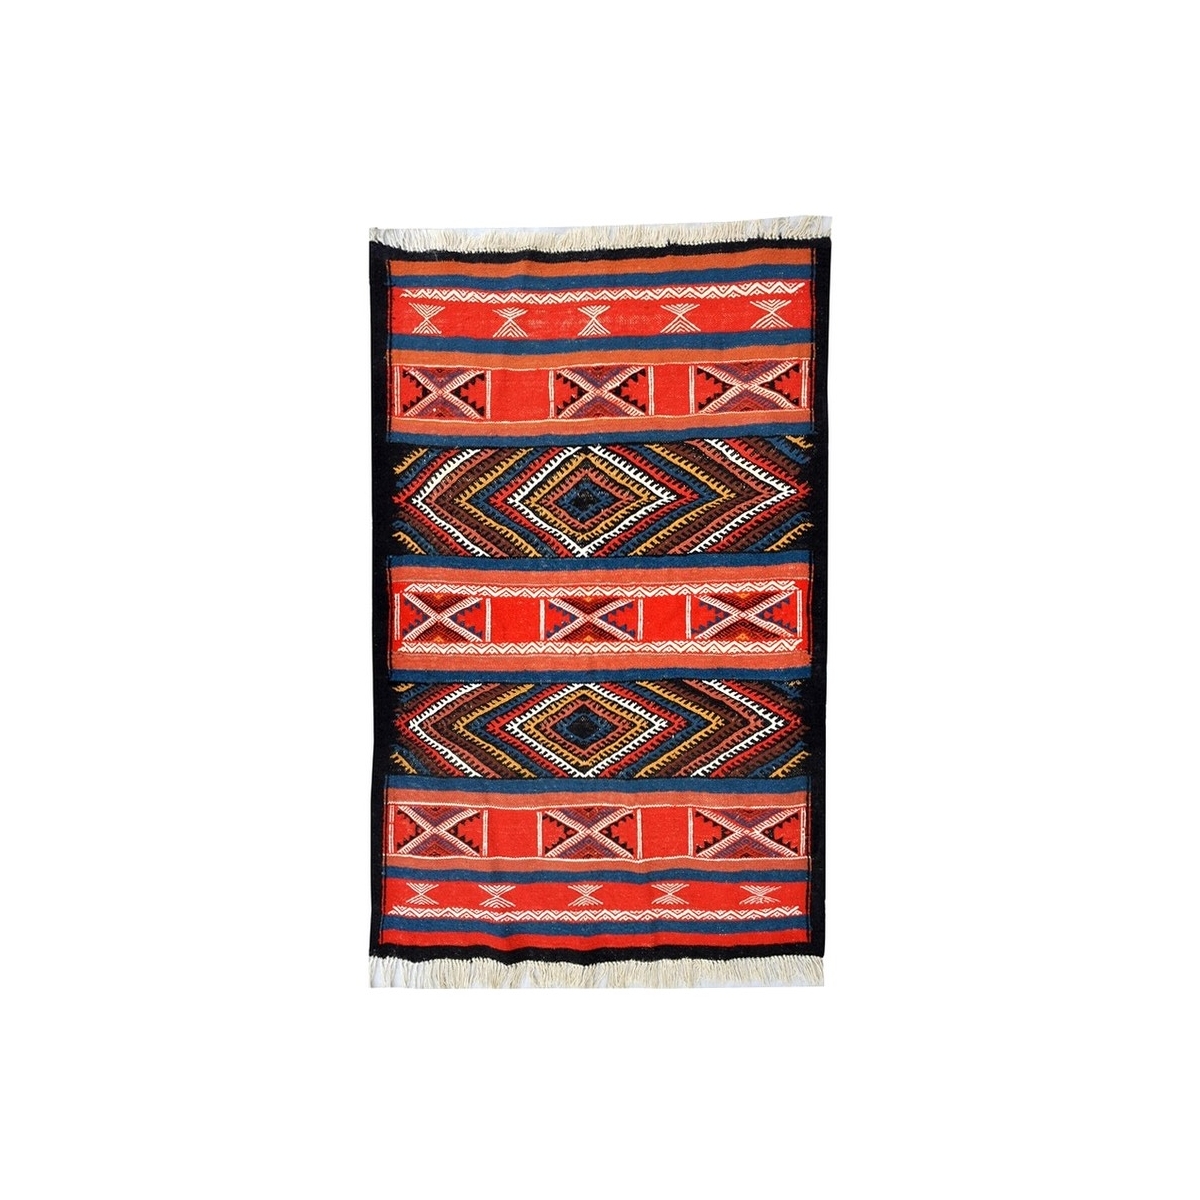 Berber tapijt Tapijt Kilim Akil 77x105 Veelkleurig (Handgeweven, Wol, Tunesië) Tunesisch kilimdeken, Marokkaanse stijl. Rechthoe